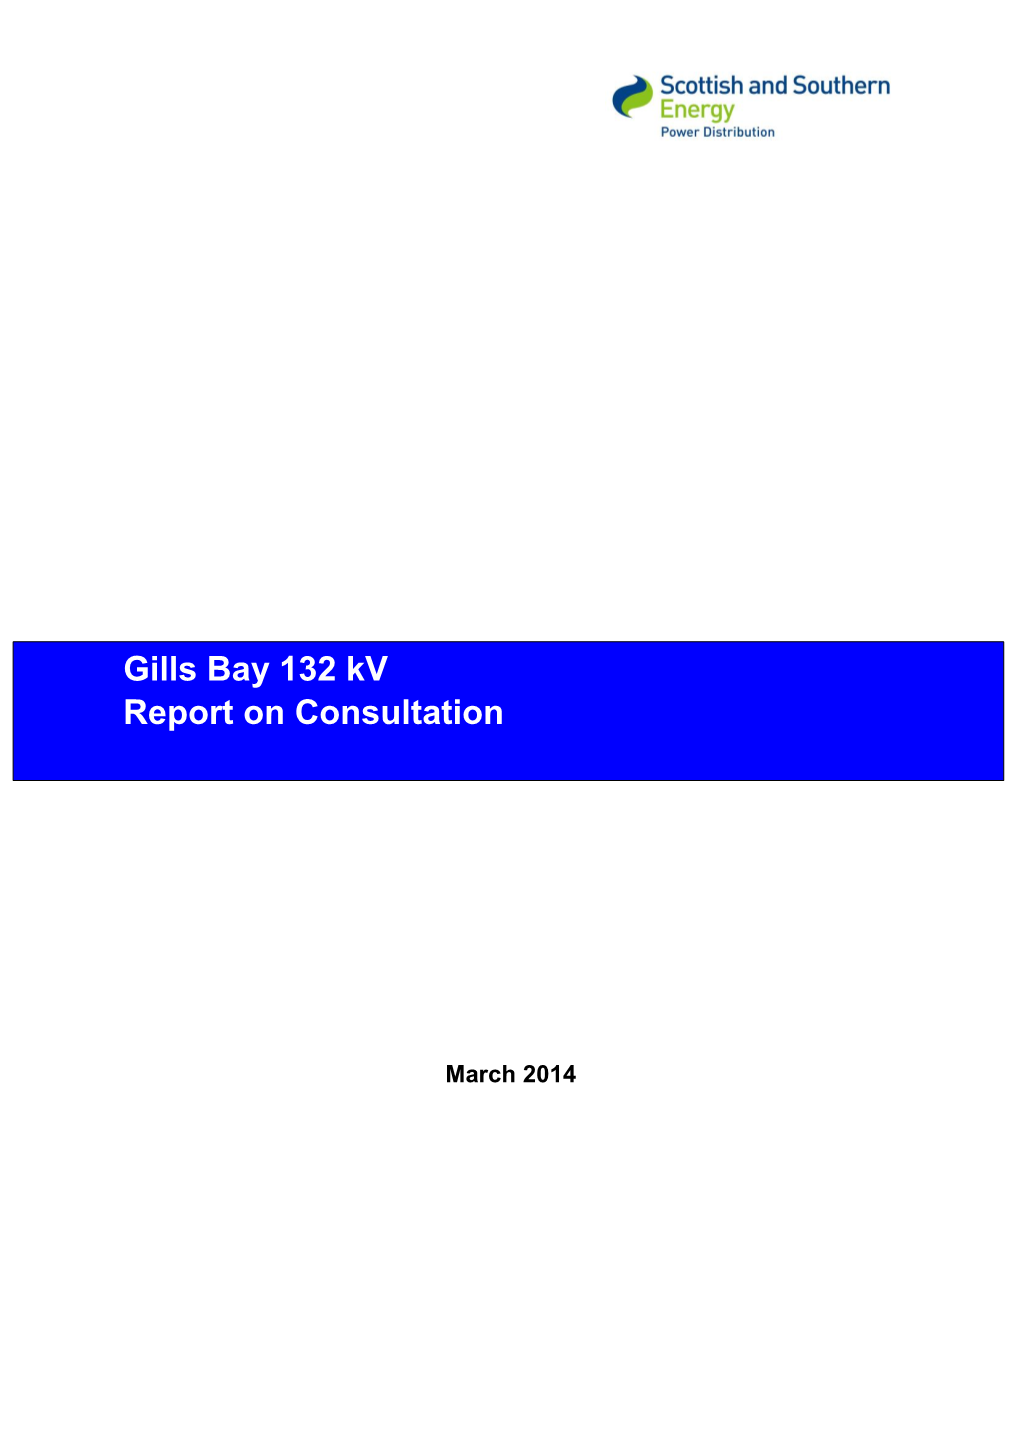 Gills Bay 132 Kv Report on Consultation